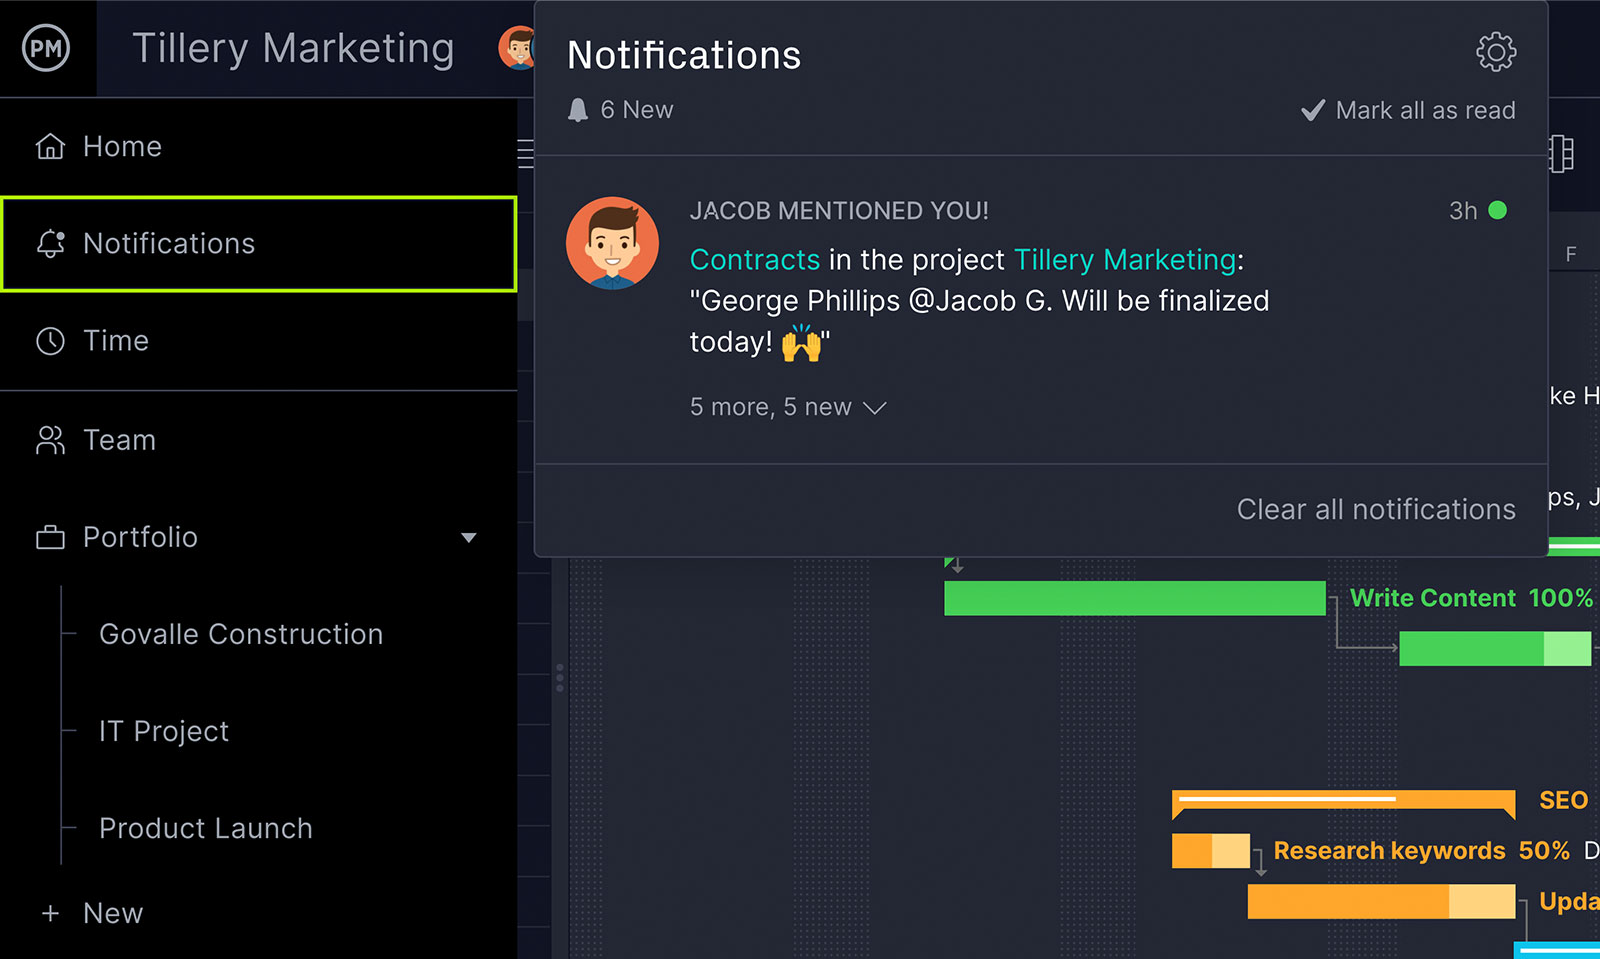 Real-time notifications keep team members in sync